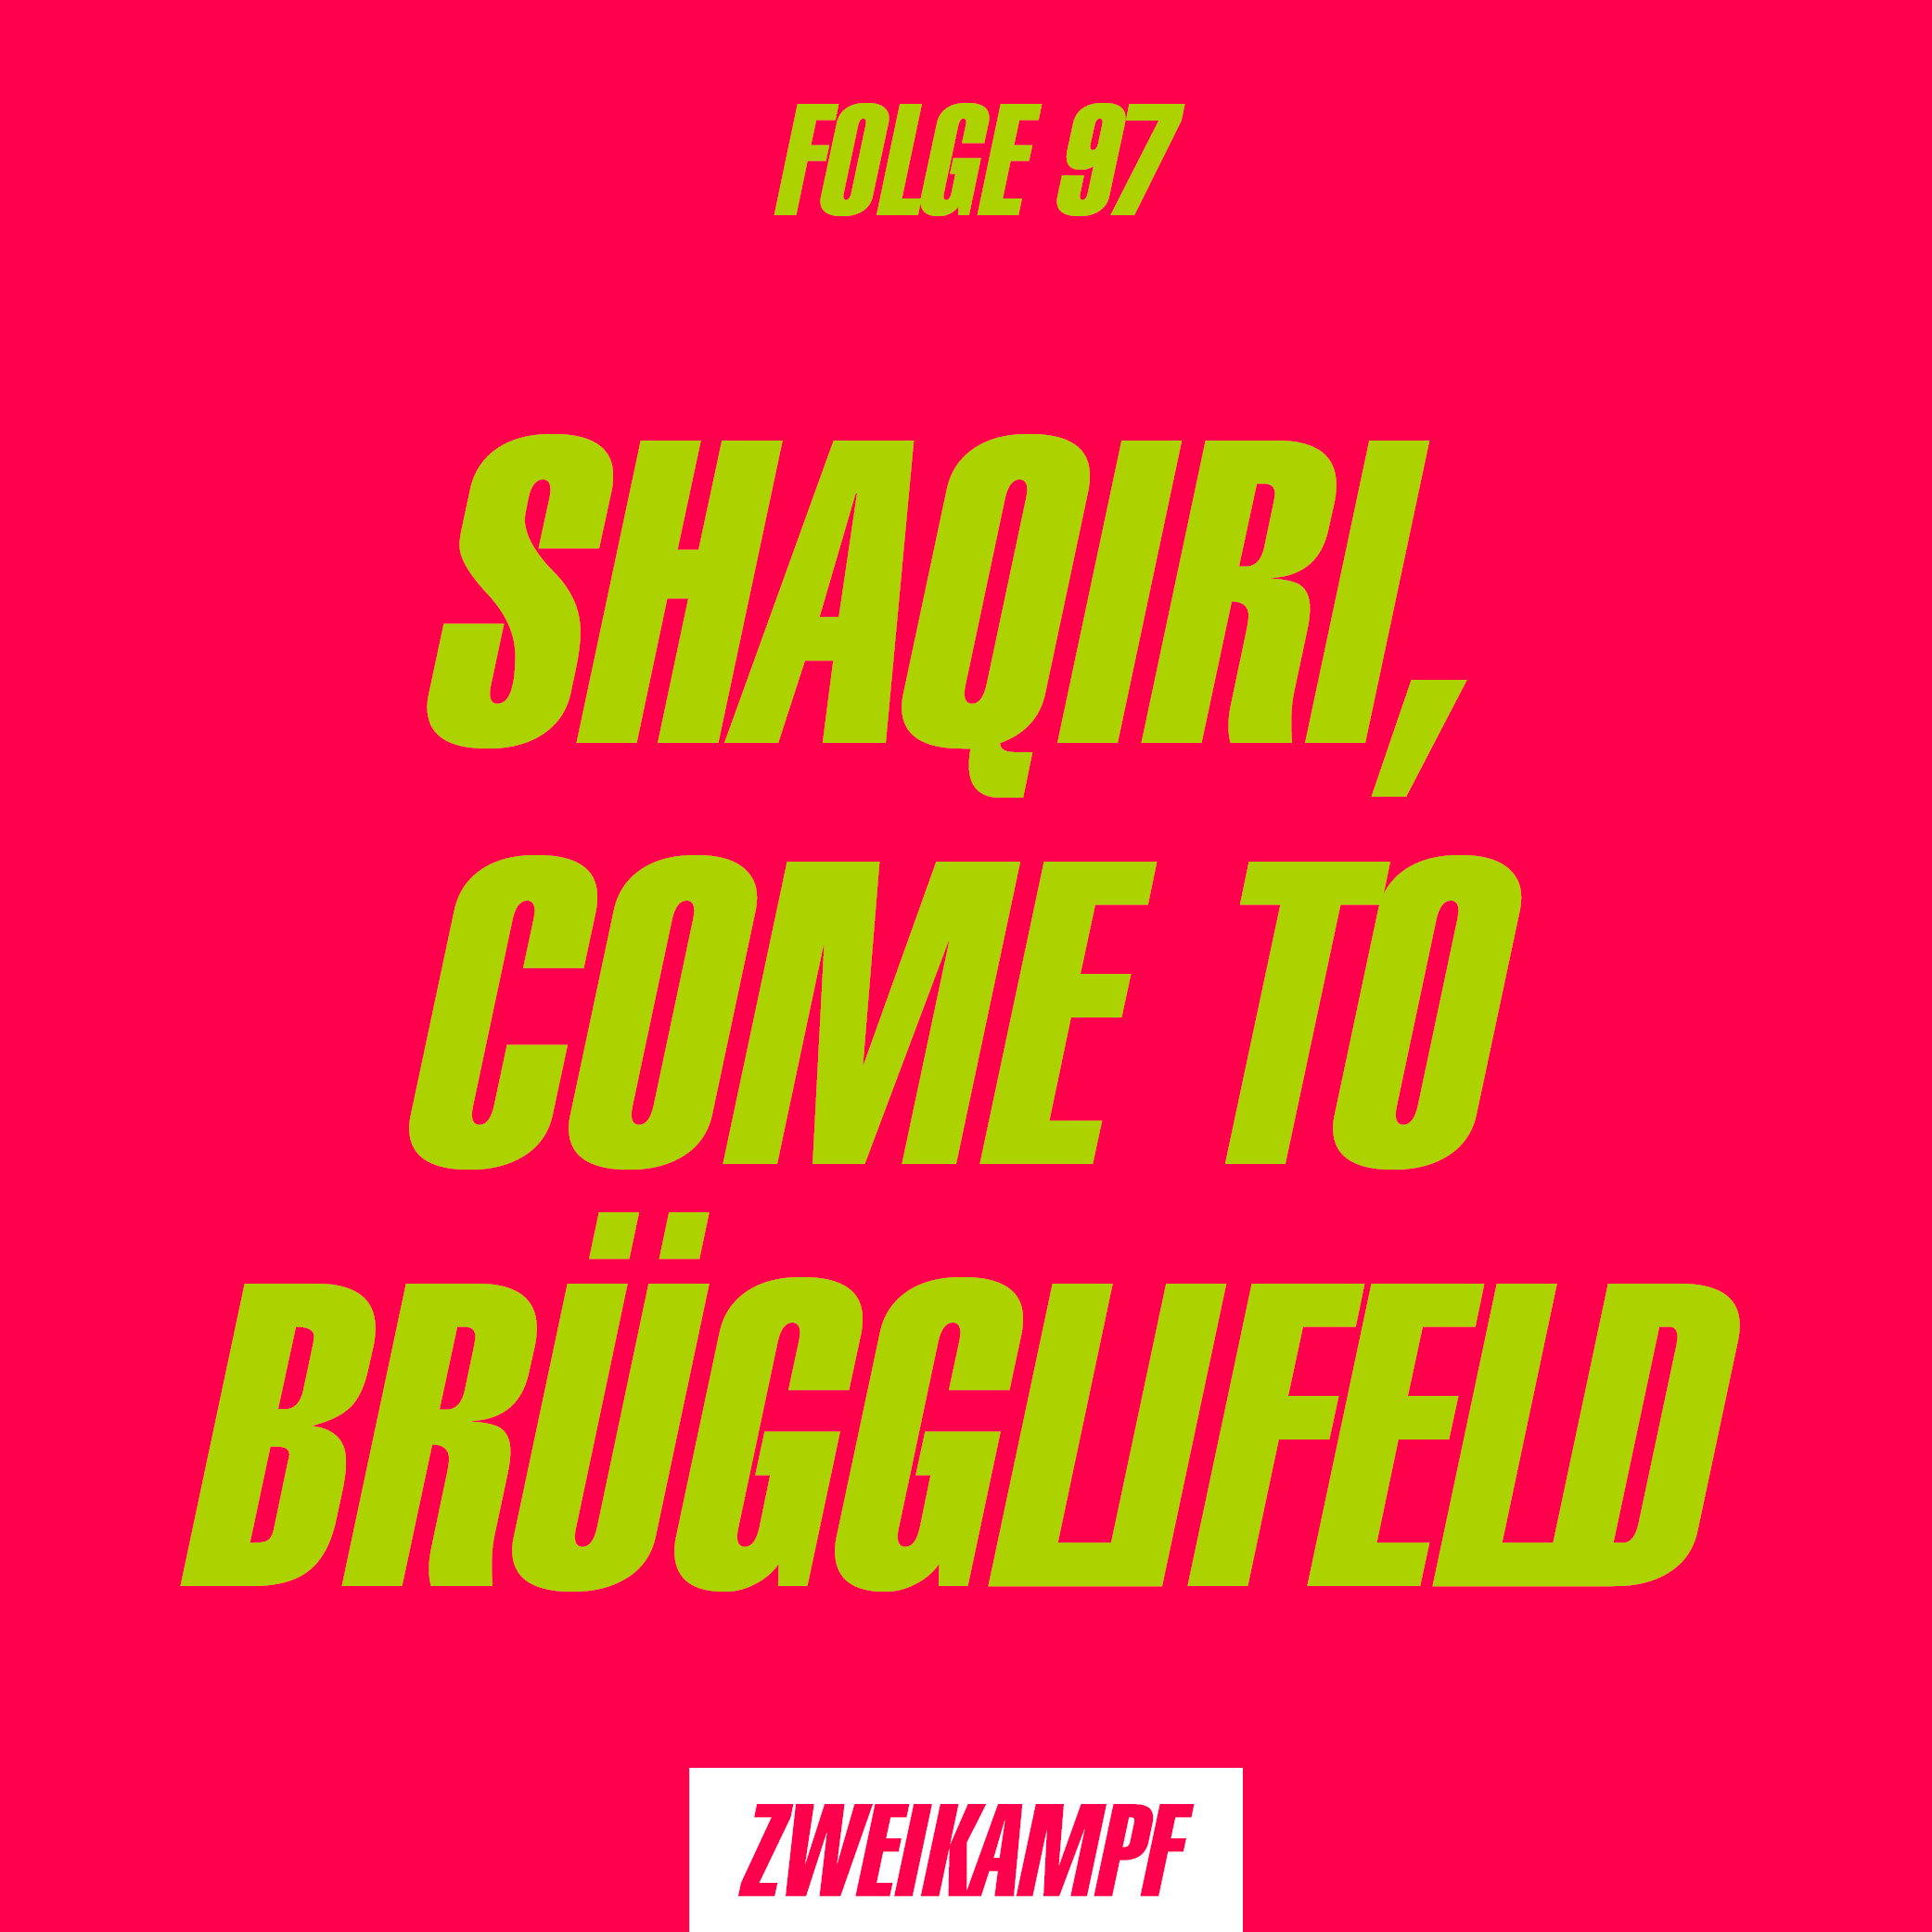 Folge 97: Shaqiri, come to Brügglifeld